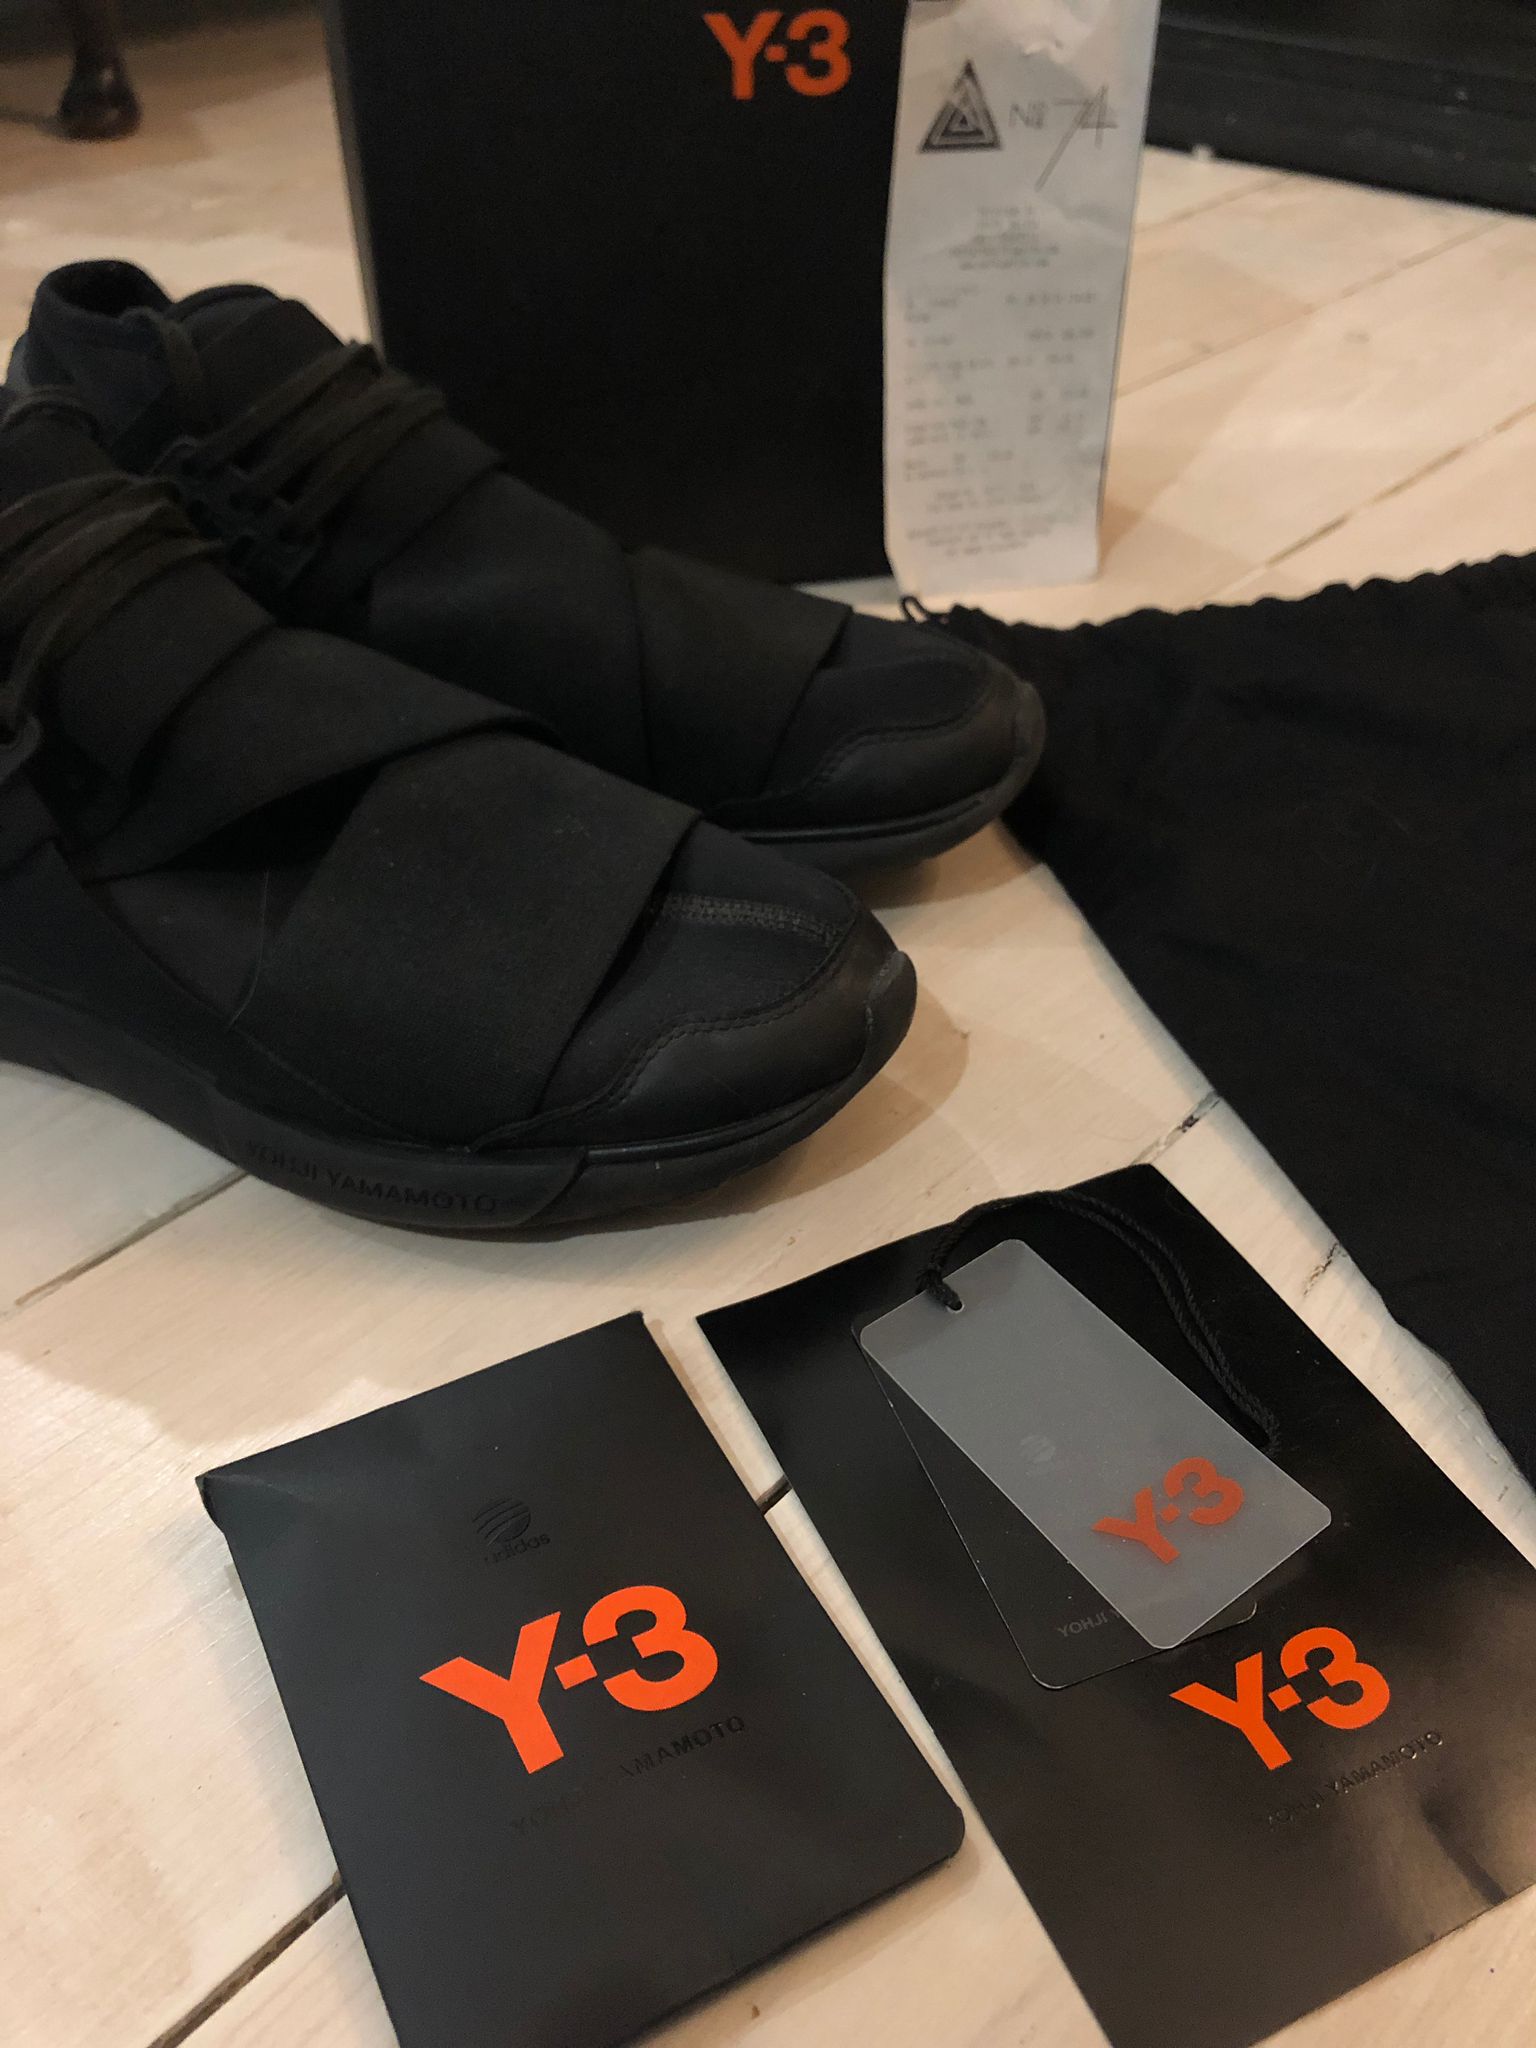 Y-3 Adidas x Yohji Yamamoto Qasa High - 3